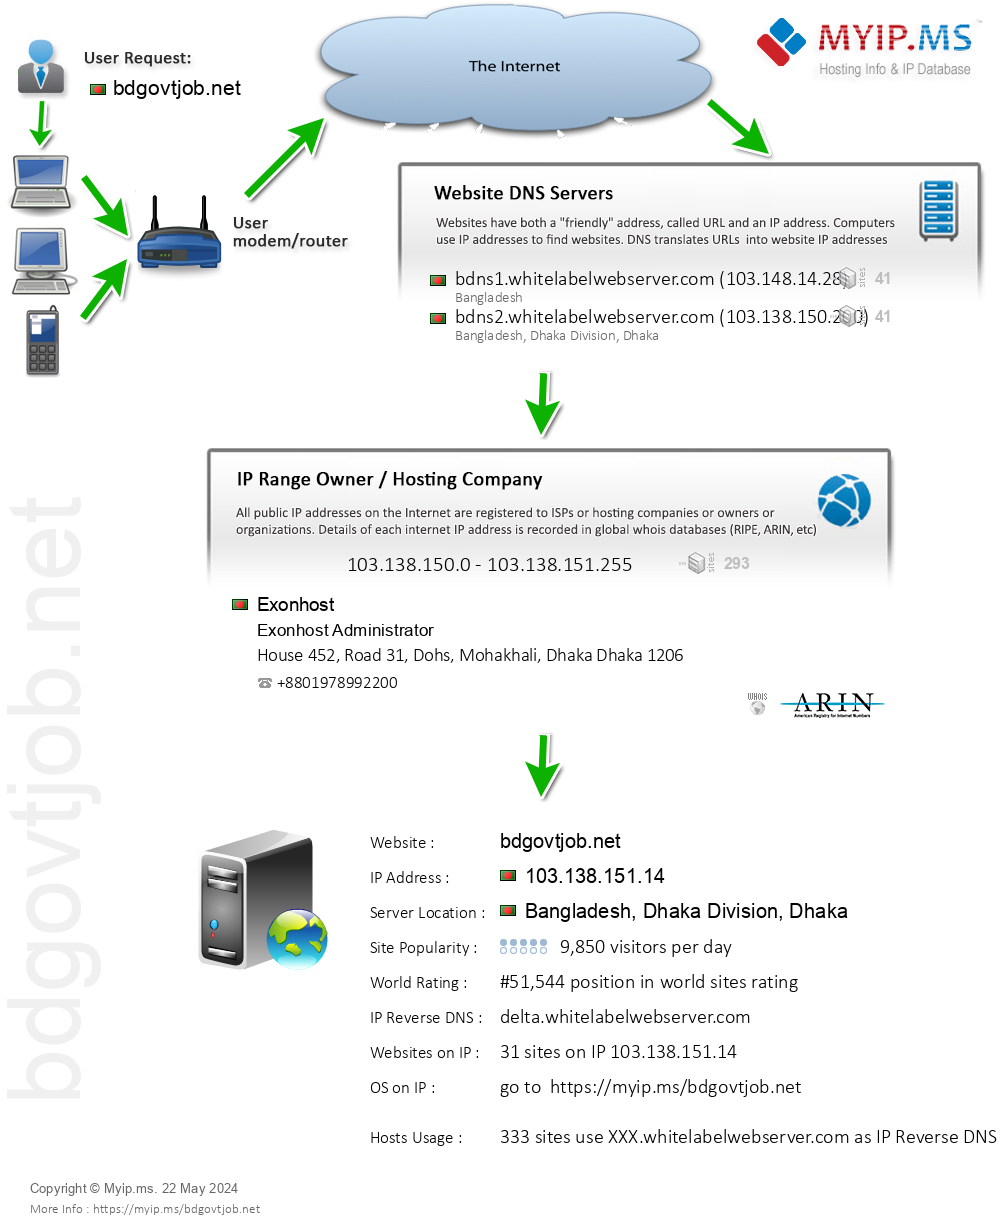 Bdgovtjob.net - Website Hosting Visual IP Diagram